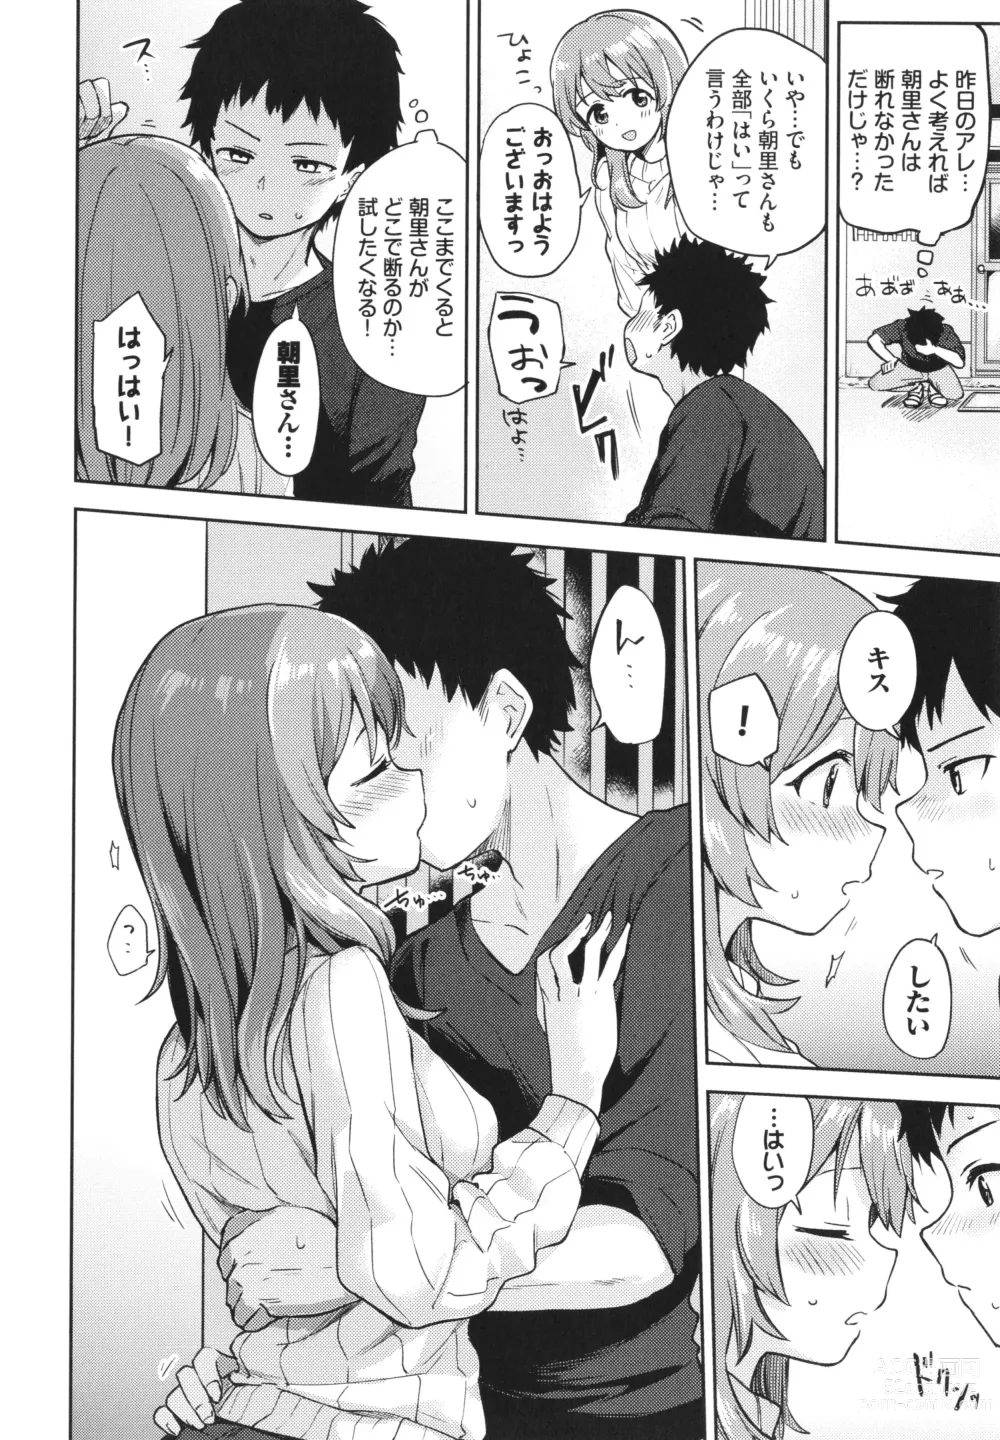 Page 175 of manga Secret Time